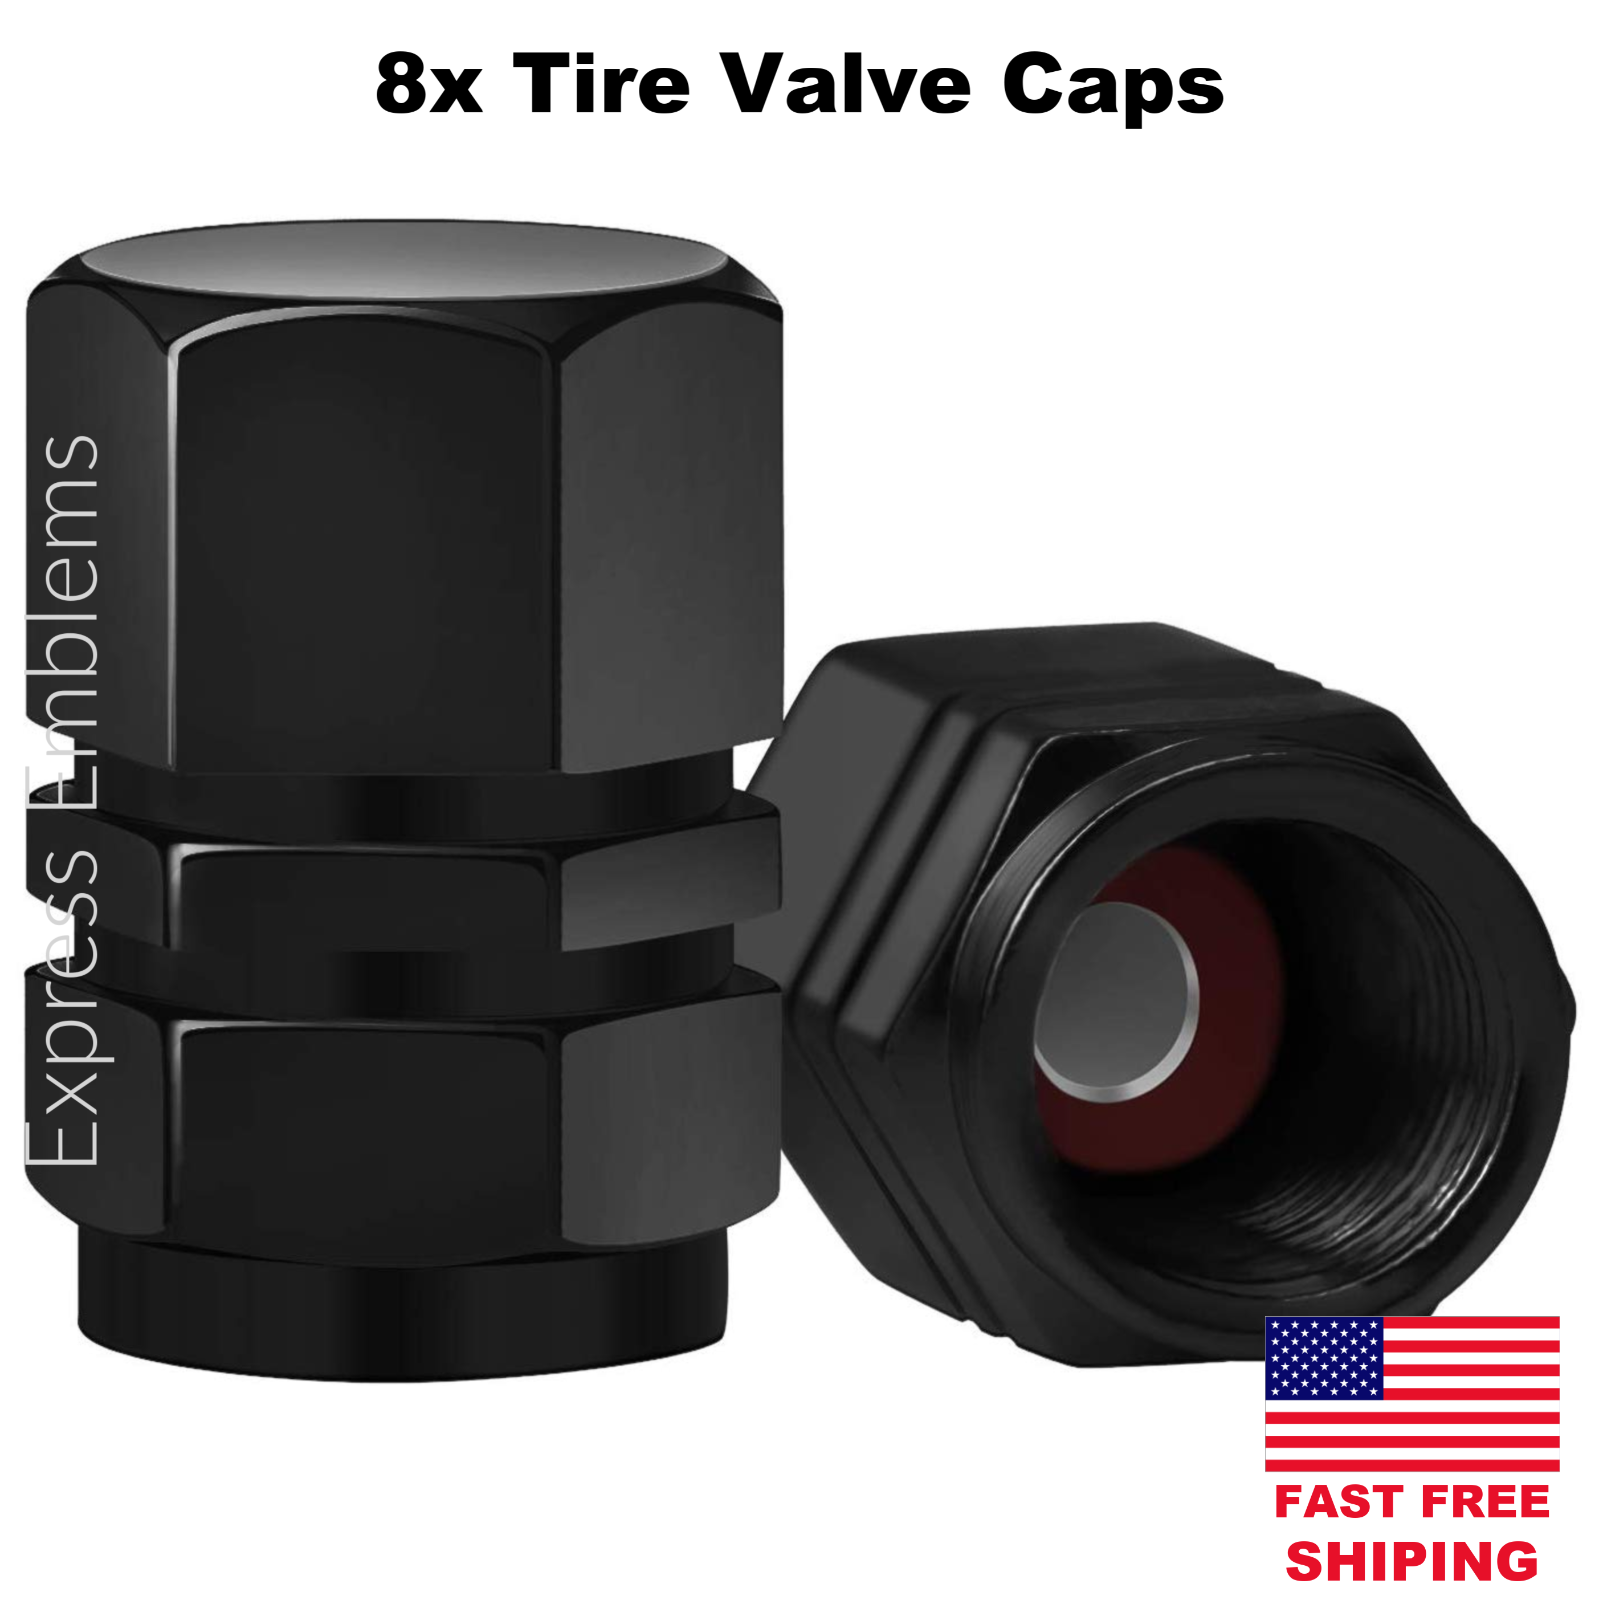 8pcs Black Tire Valve Cap Stem Cover For Bike, Car, Trucks, Atv